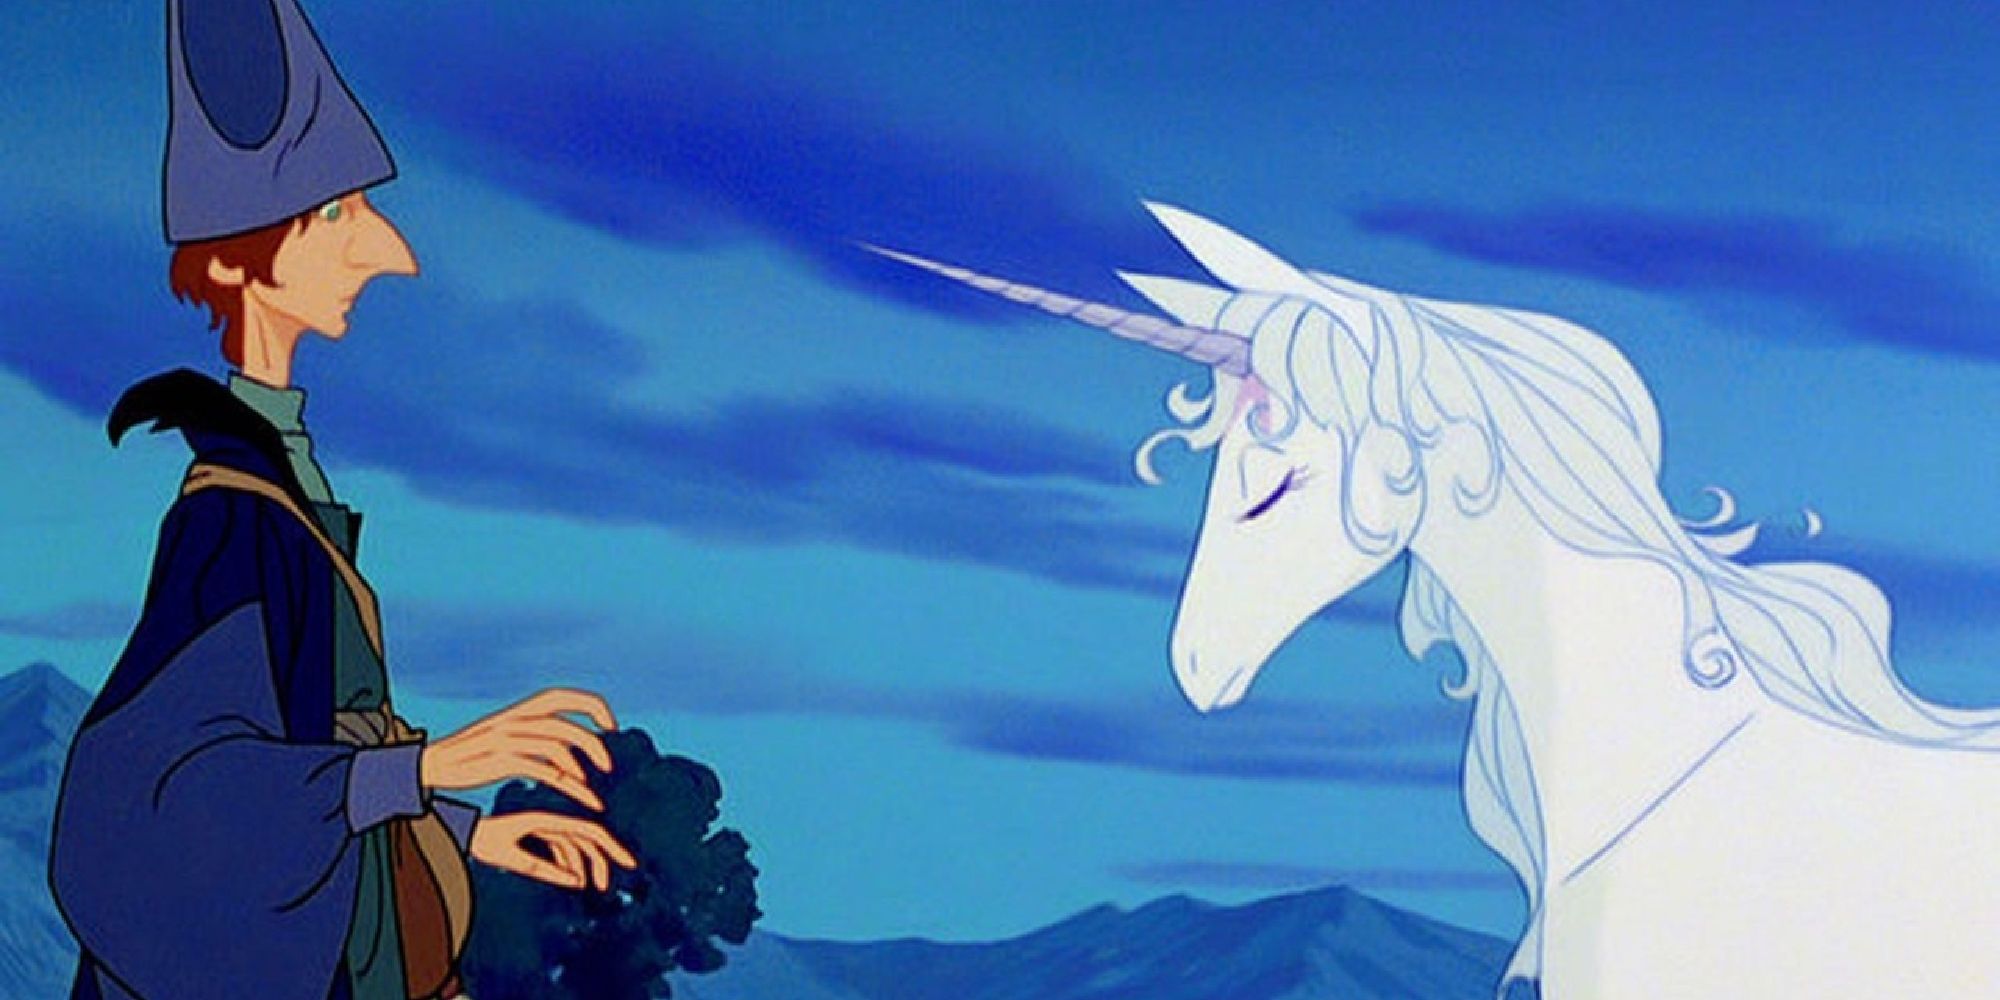 The unicorn approaching Schmendrick in "The Last Unicorn"